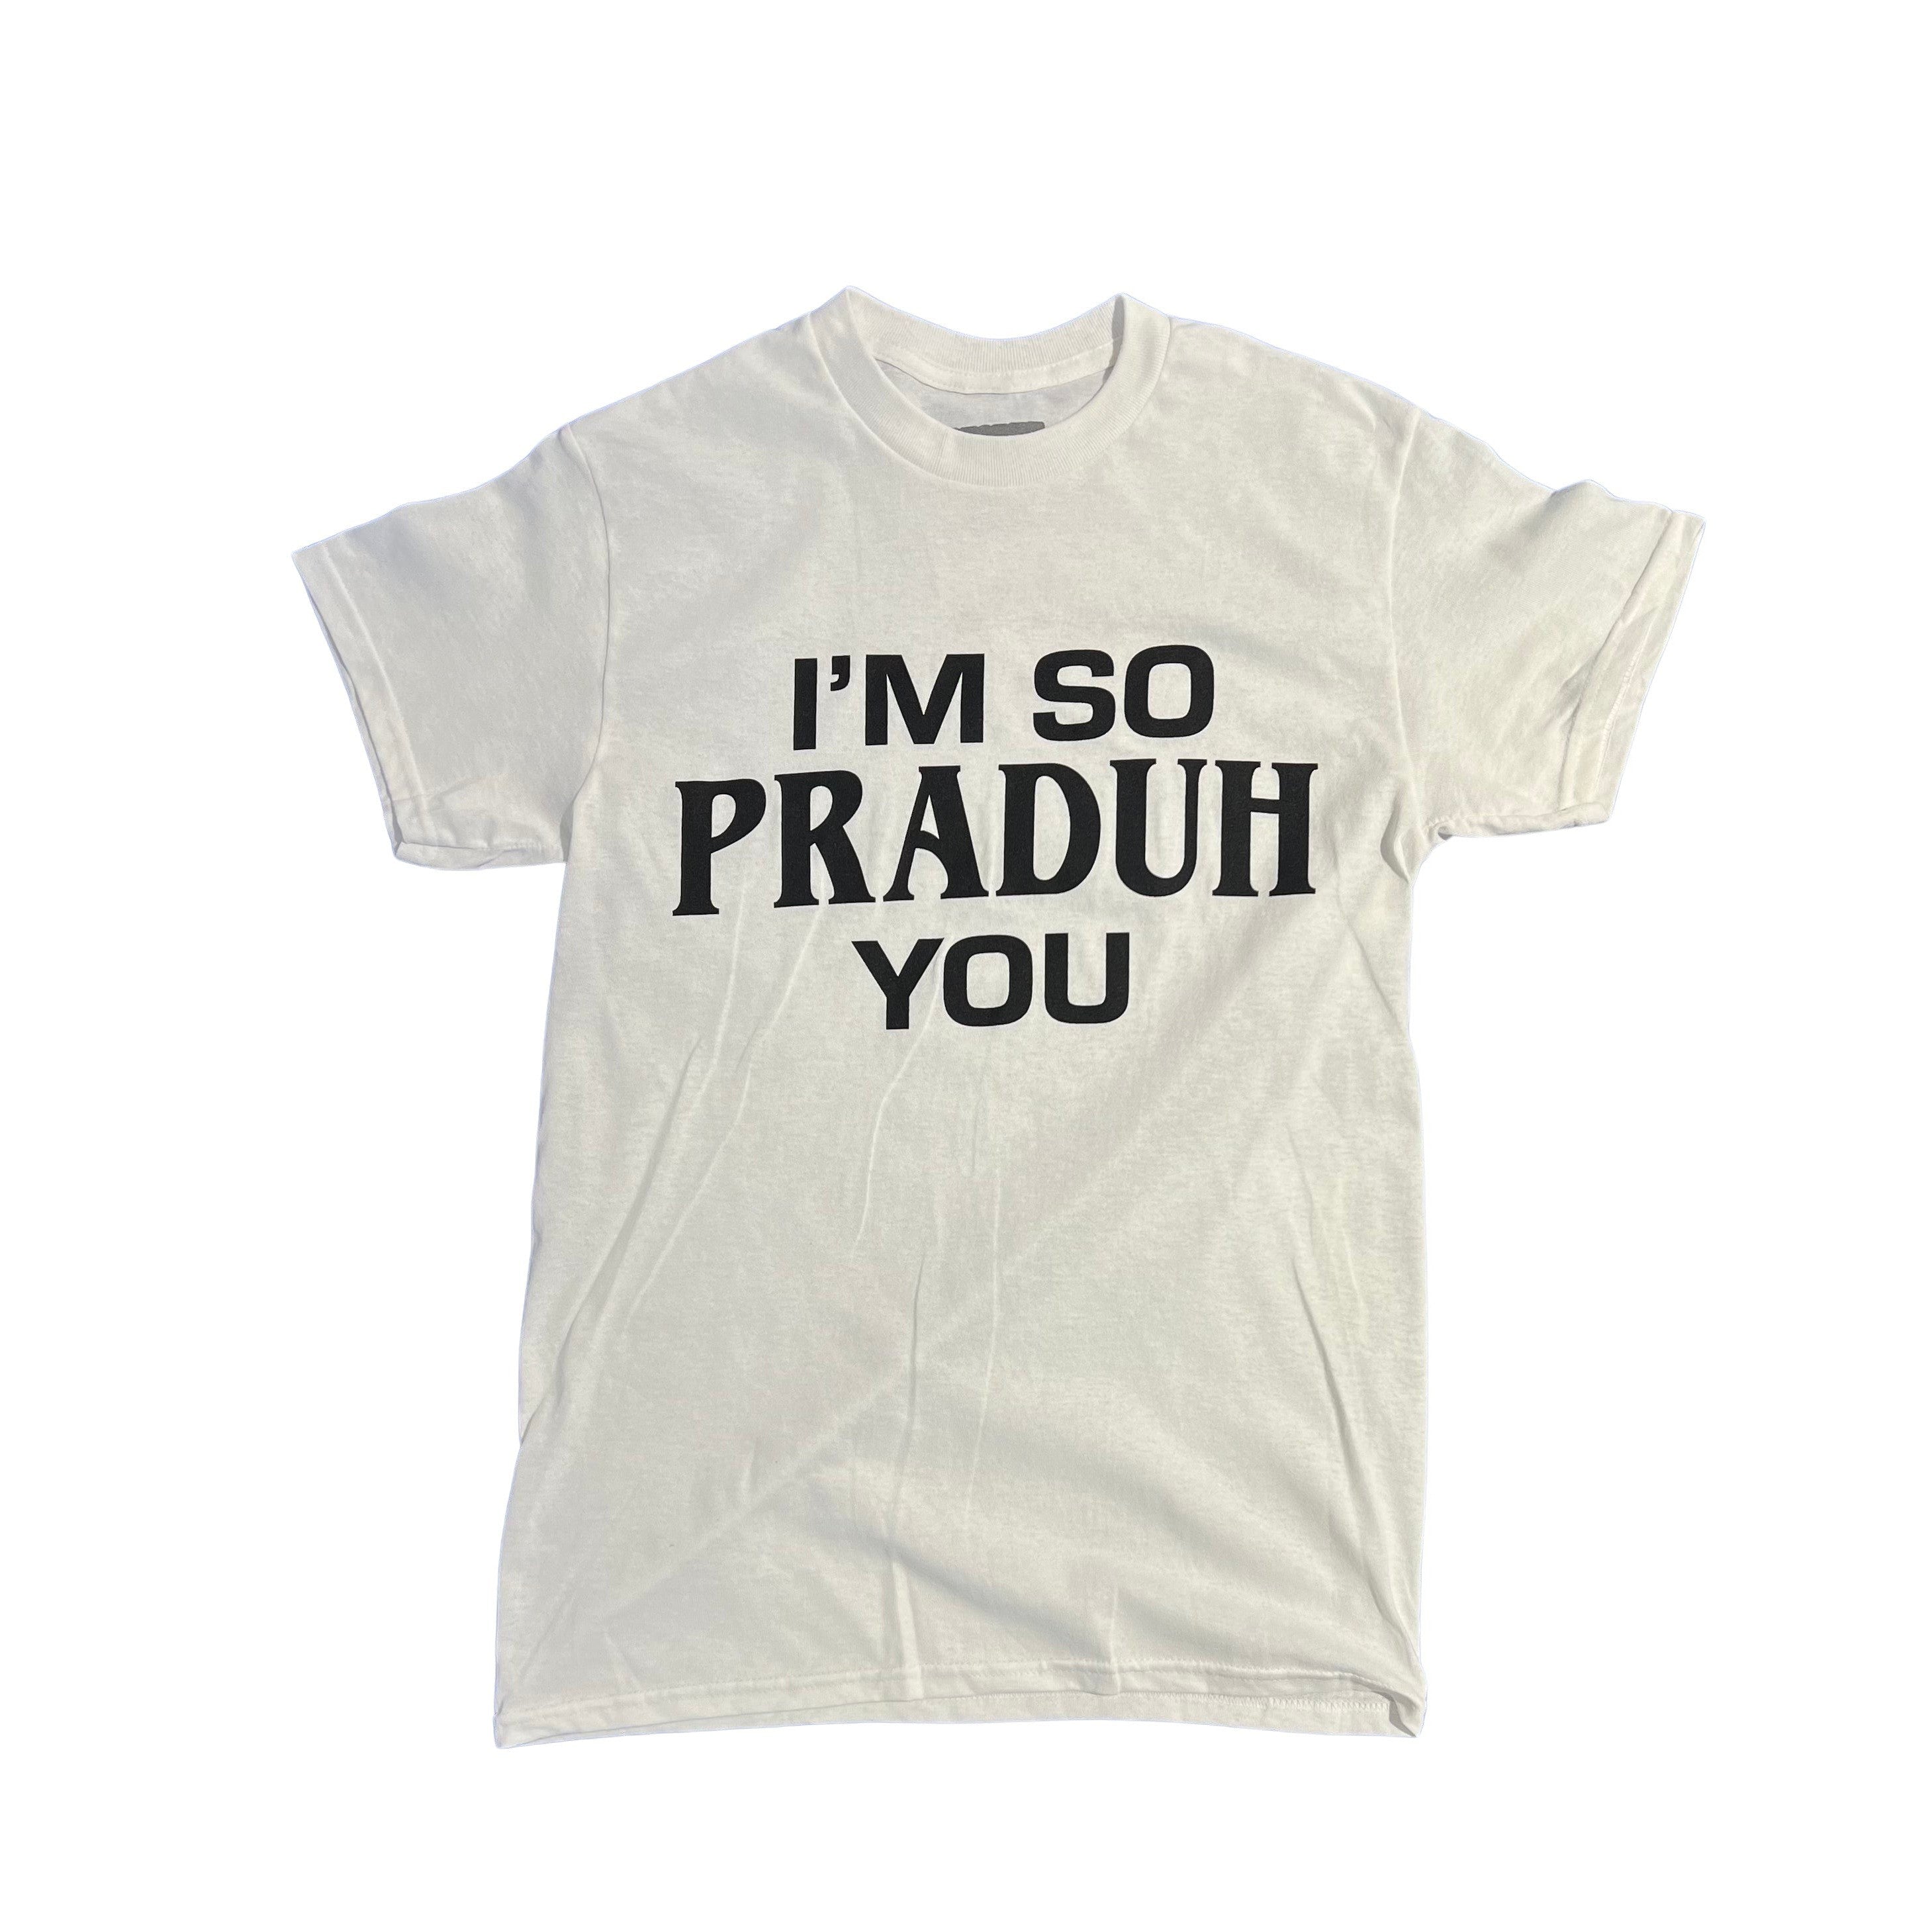 I'm So Praduh You T-Shirt